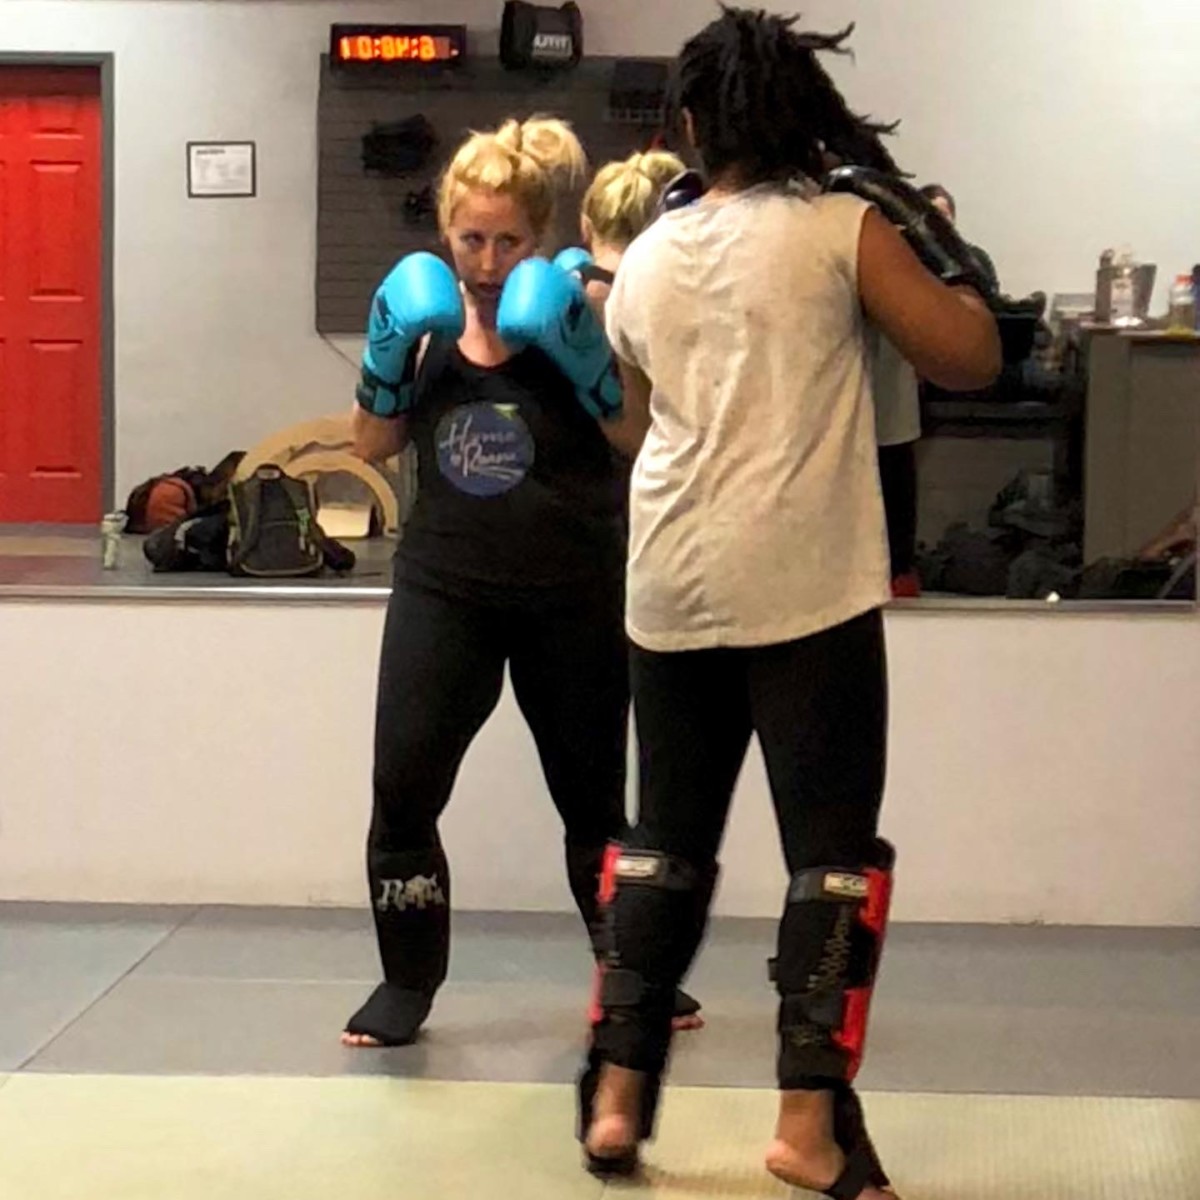 Angela Faith Martin practicing jiu jitsu while wearing turquoise hand wraps 